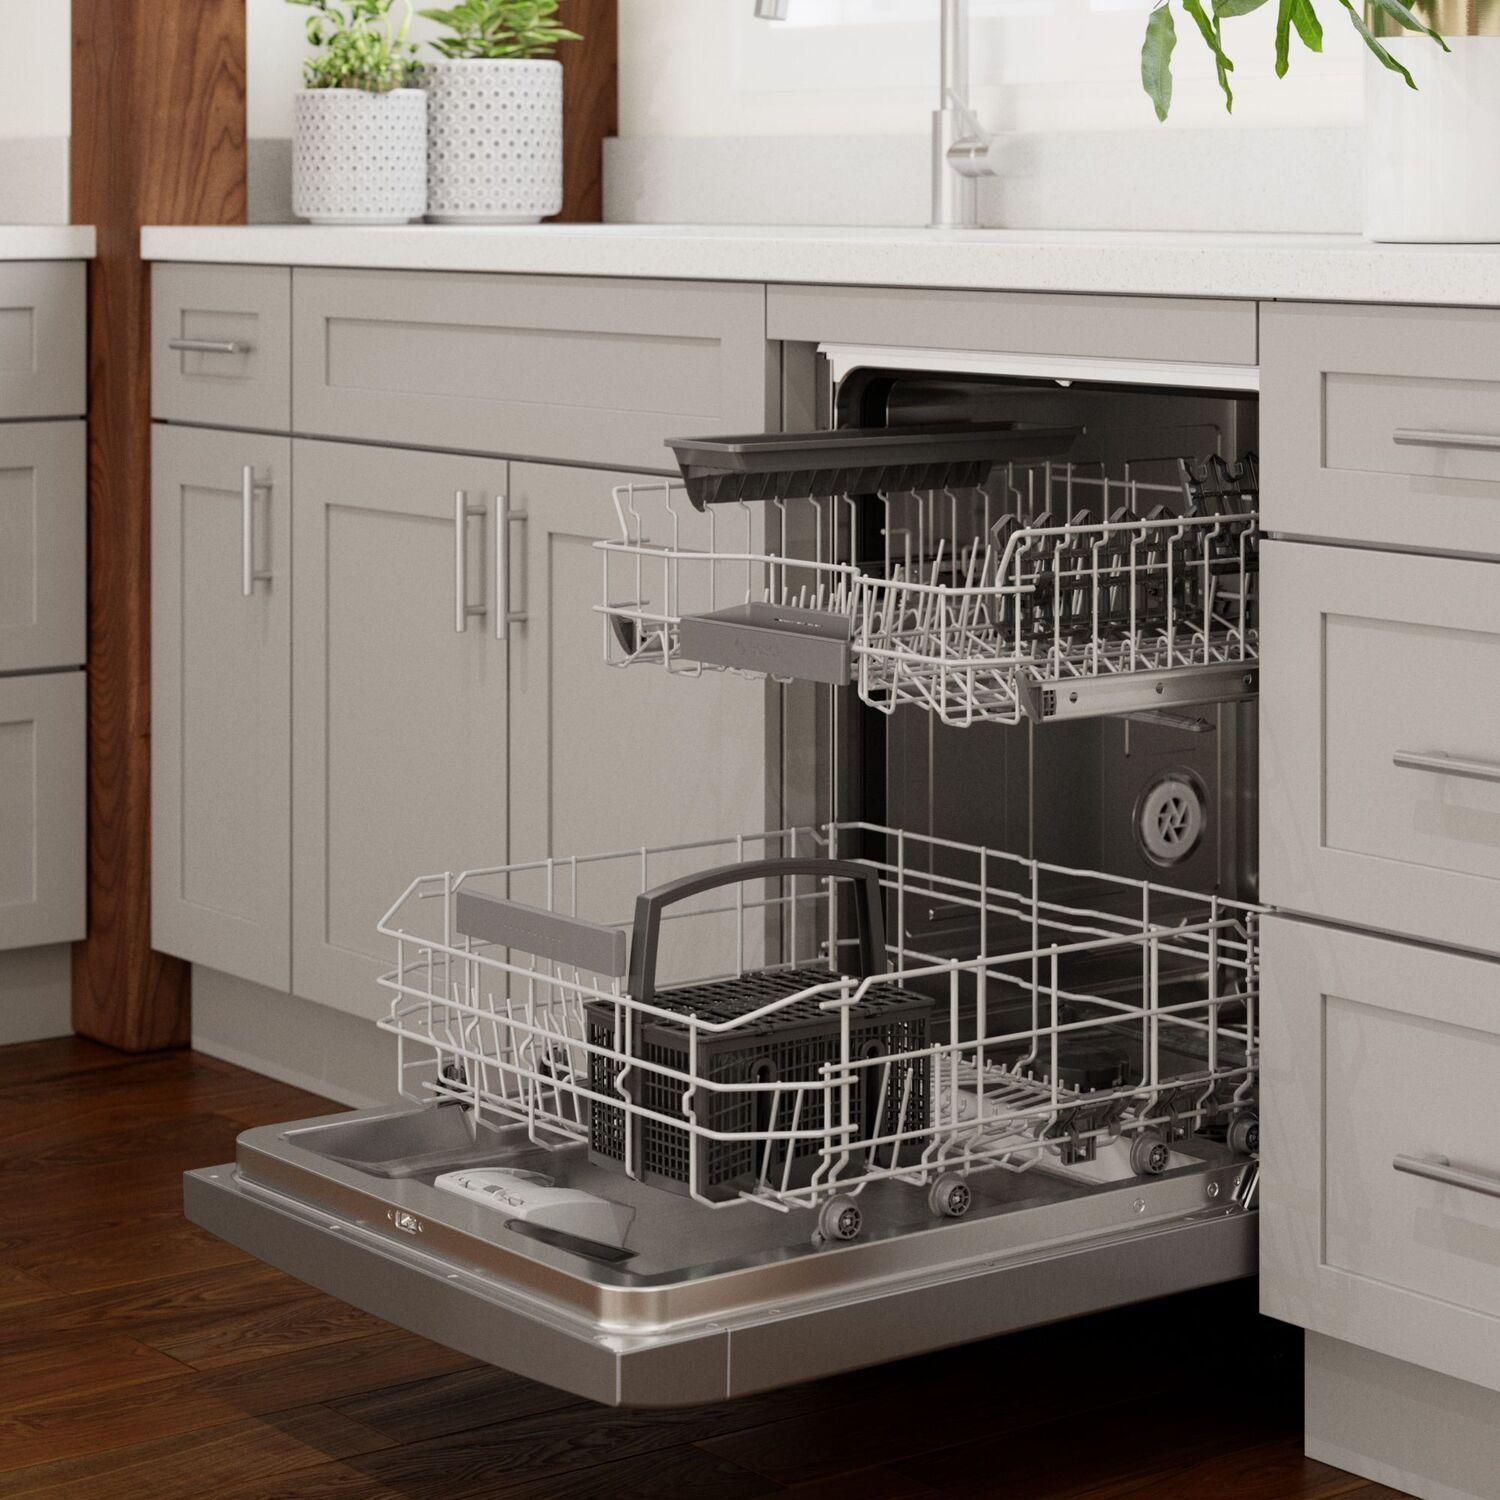 300 Series Dishwasher 24" stainless steel